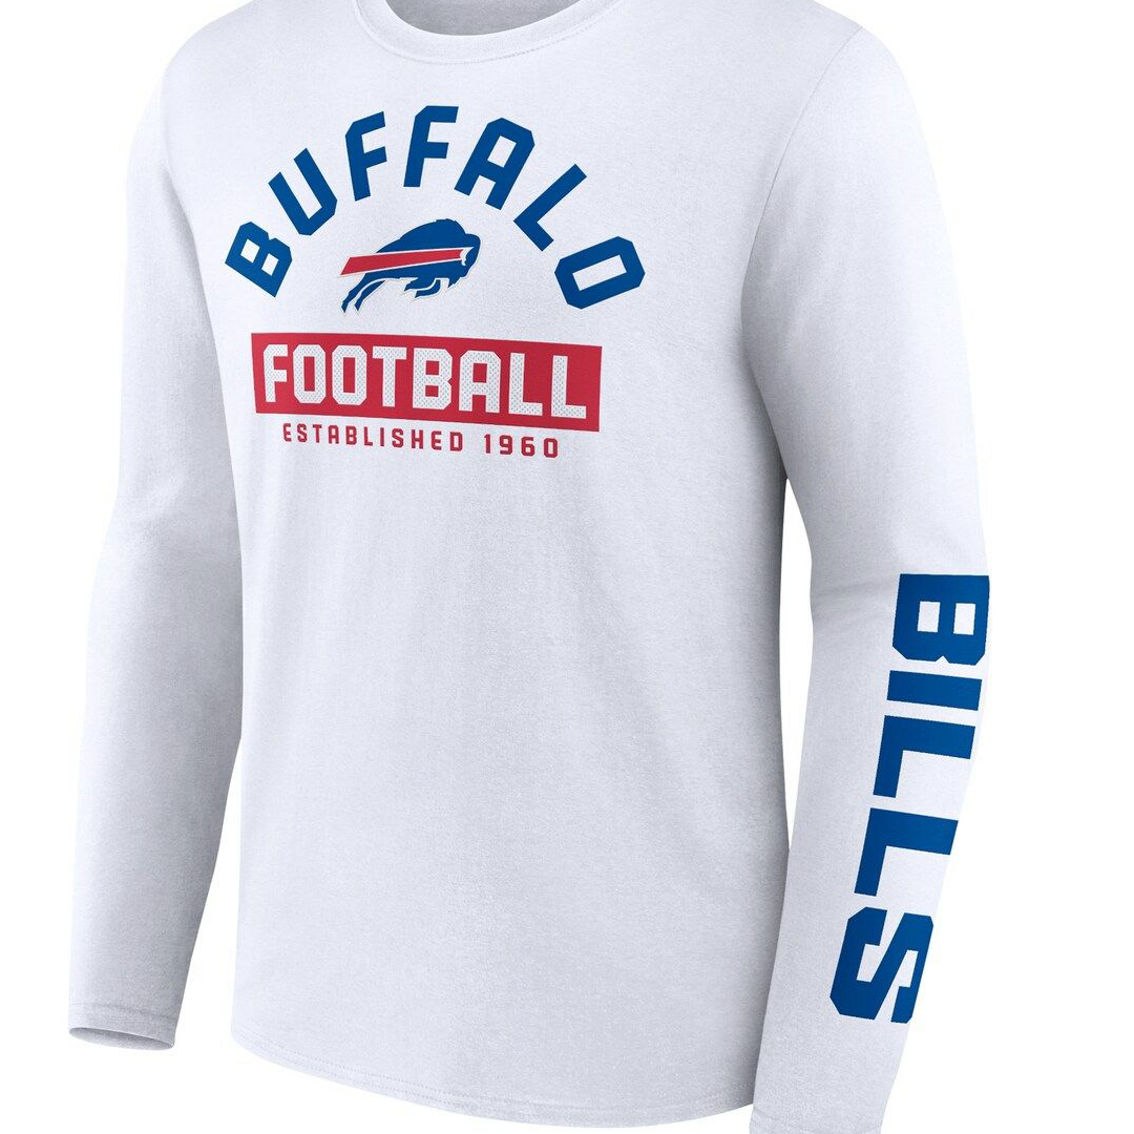 Fanatics Branded Men's White Buffalo Bills Long Sleeve T-Shirt - Image 3 of 4